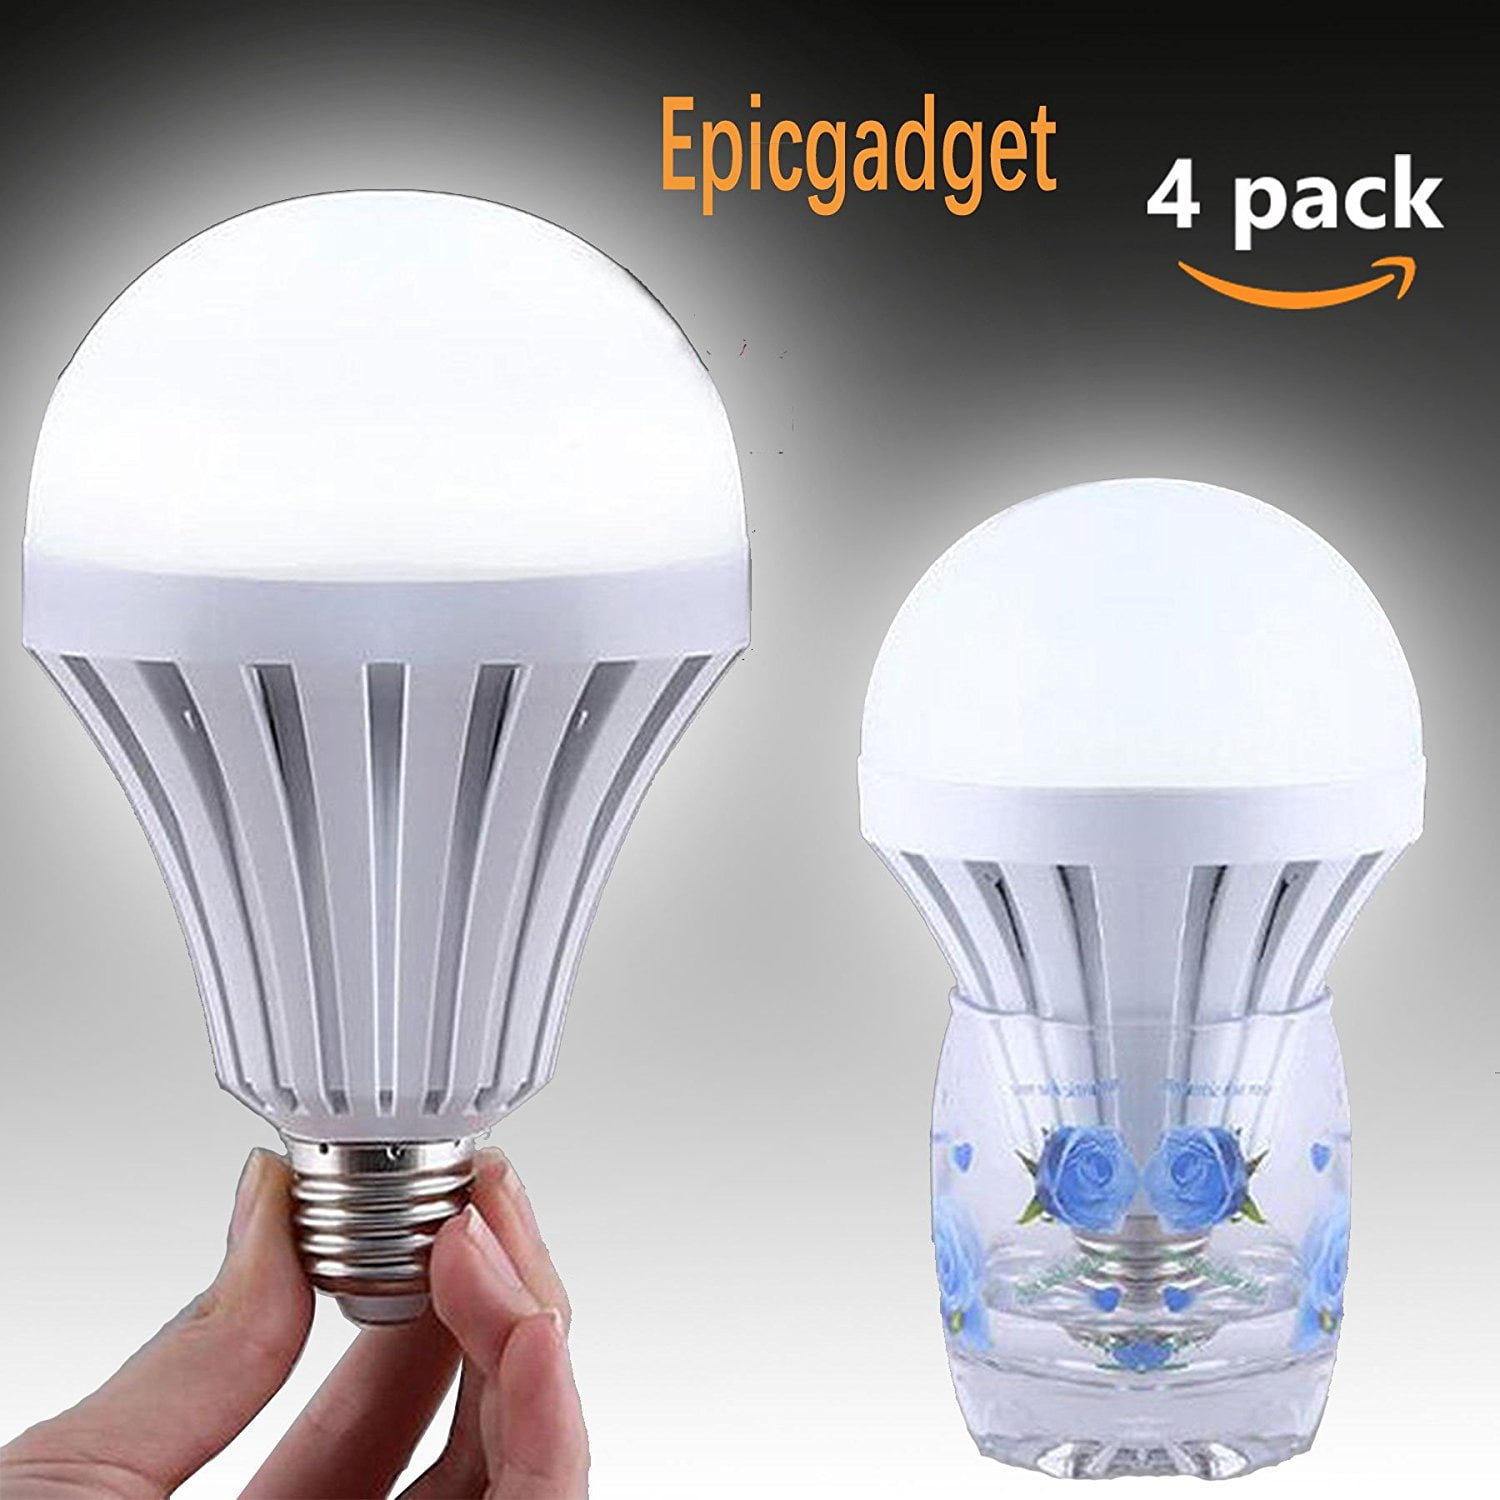 Emergency LED Light Bulb, Epicgadget 4 Pack 12W White Magical Emergency LED Bulb E27 - Walmart.com